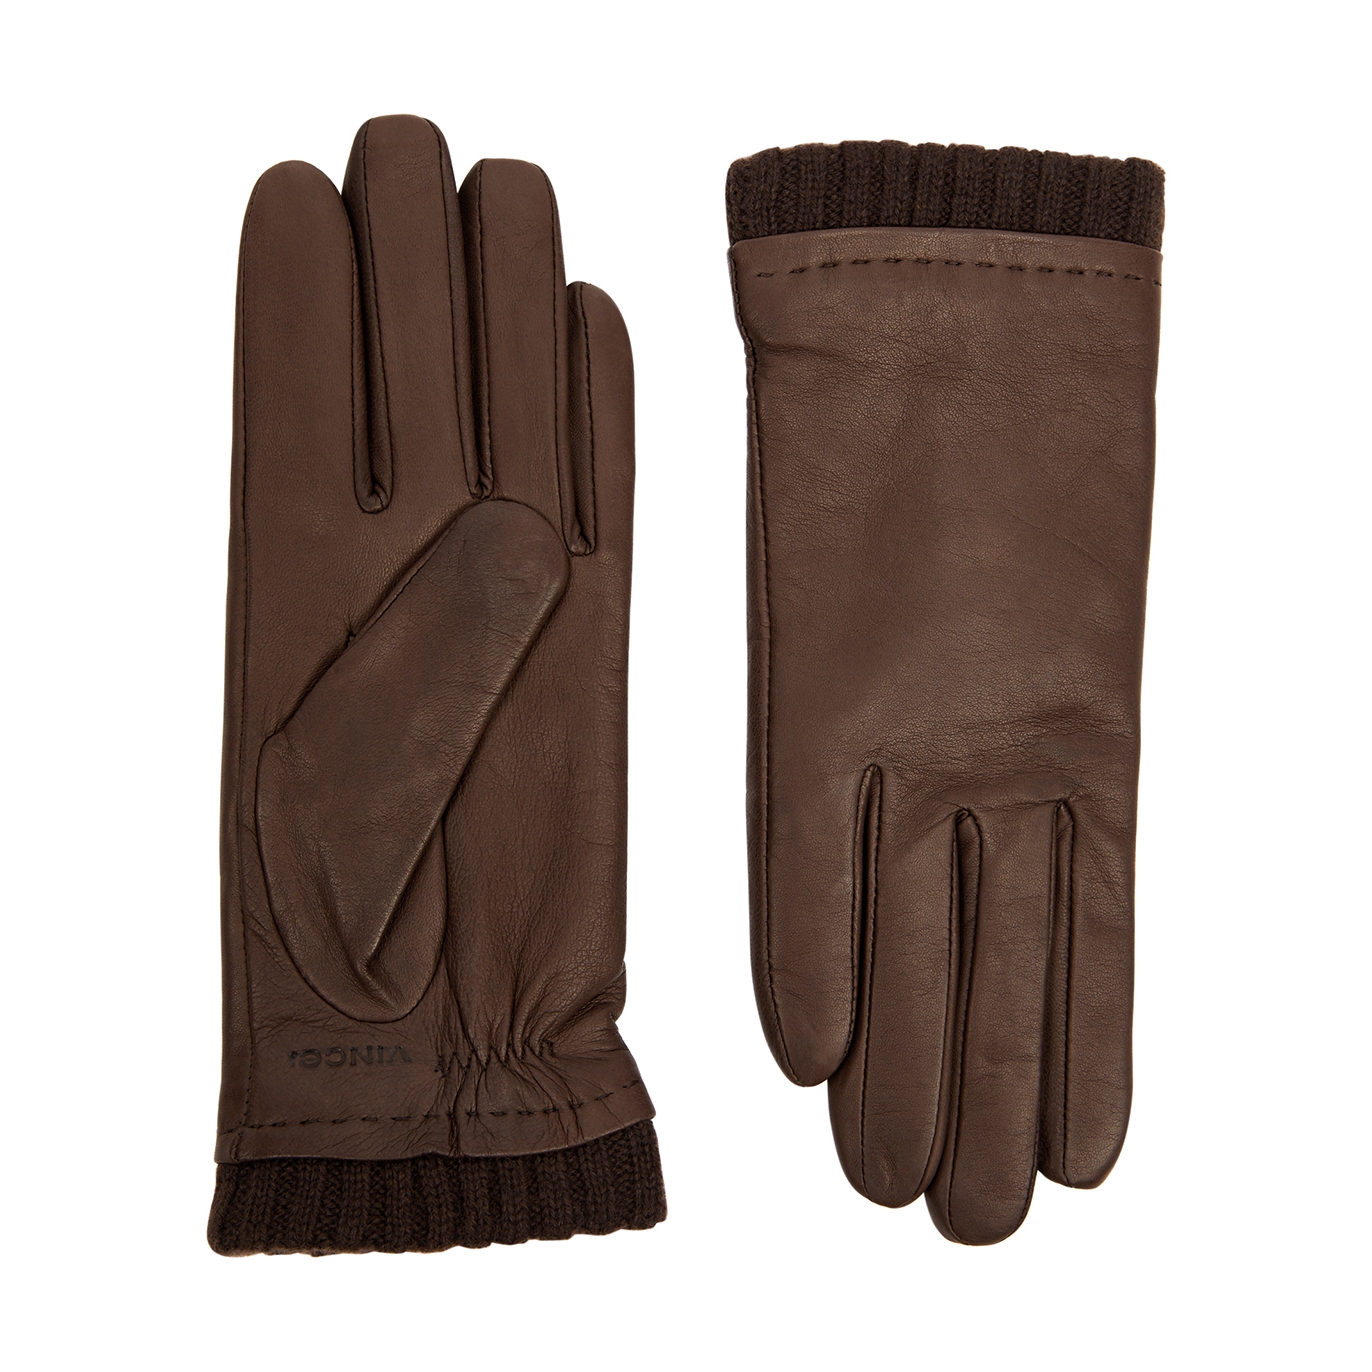 Vince Leather Gloves - Brown - L